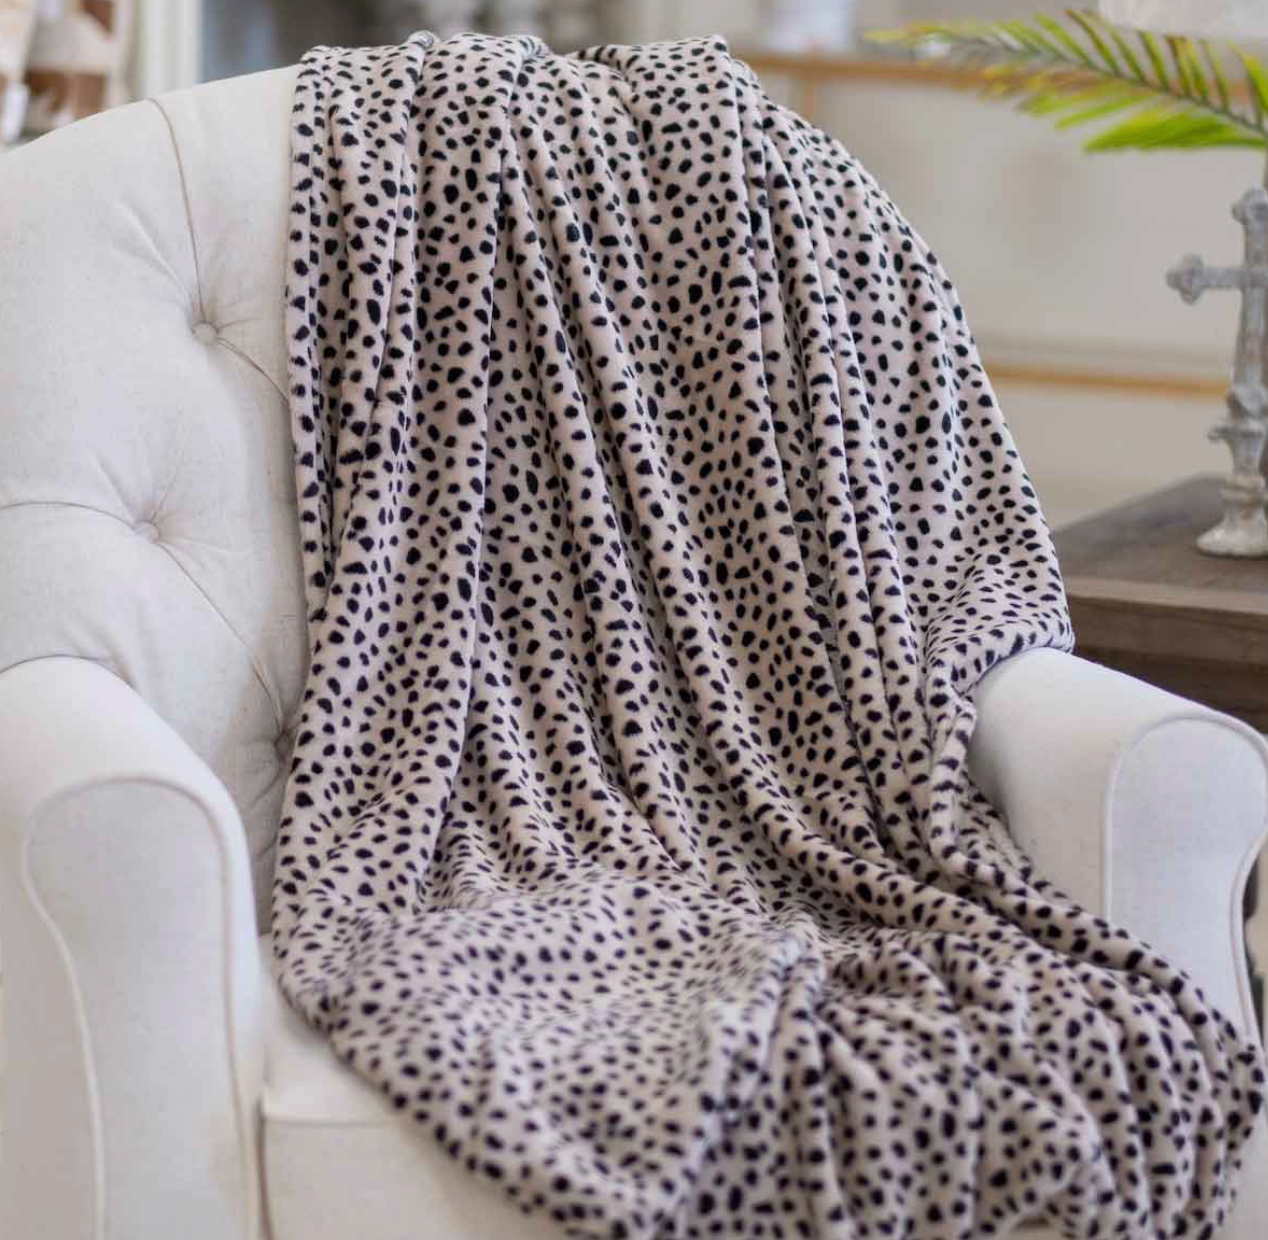 Cheetah Throw Blanket